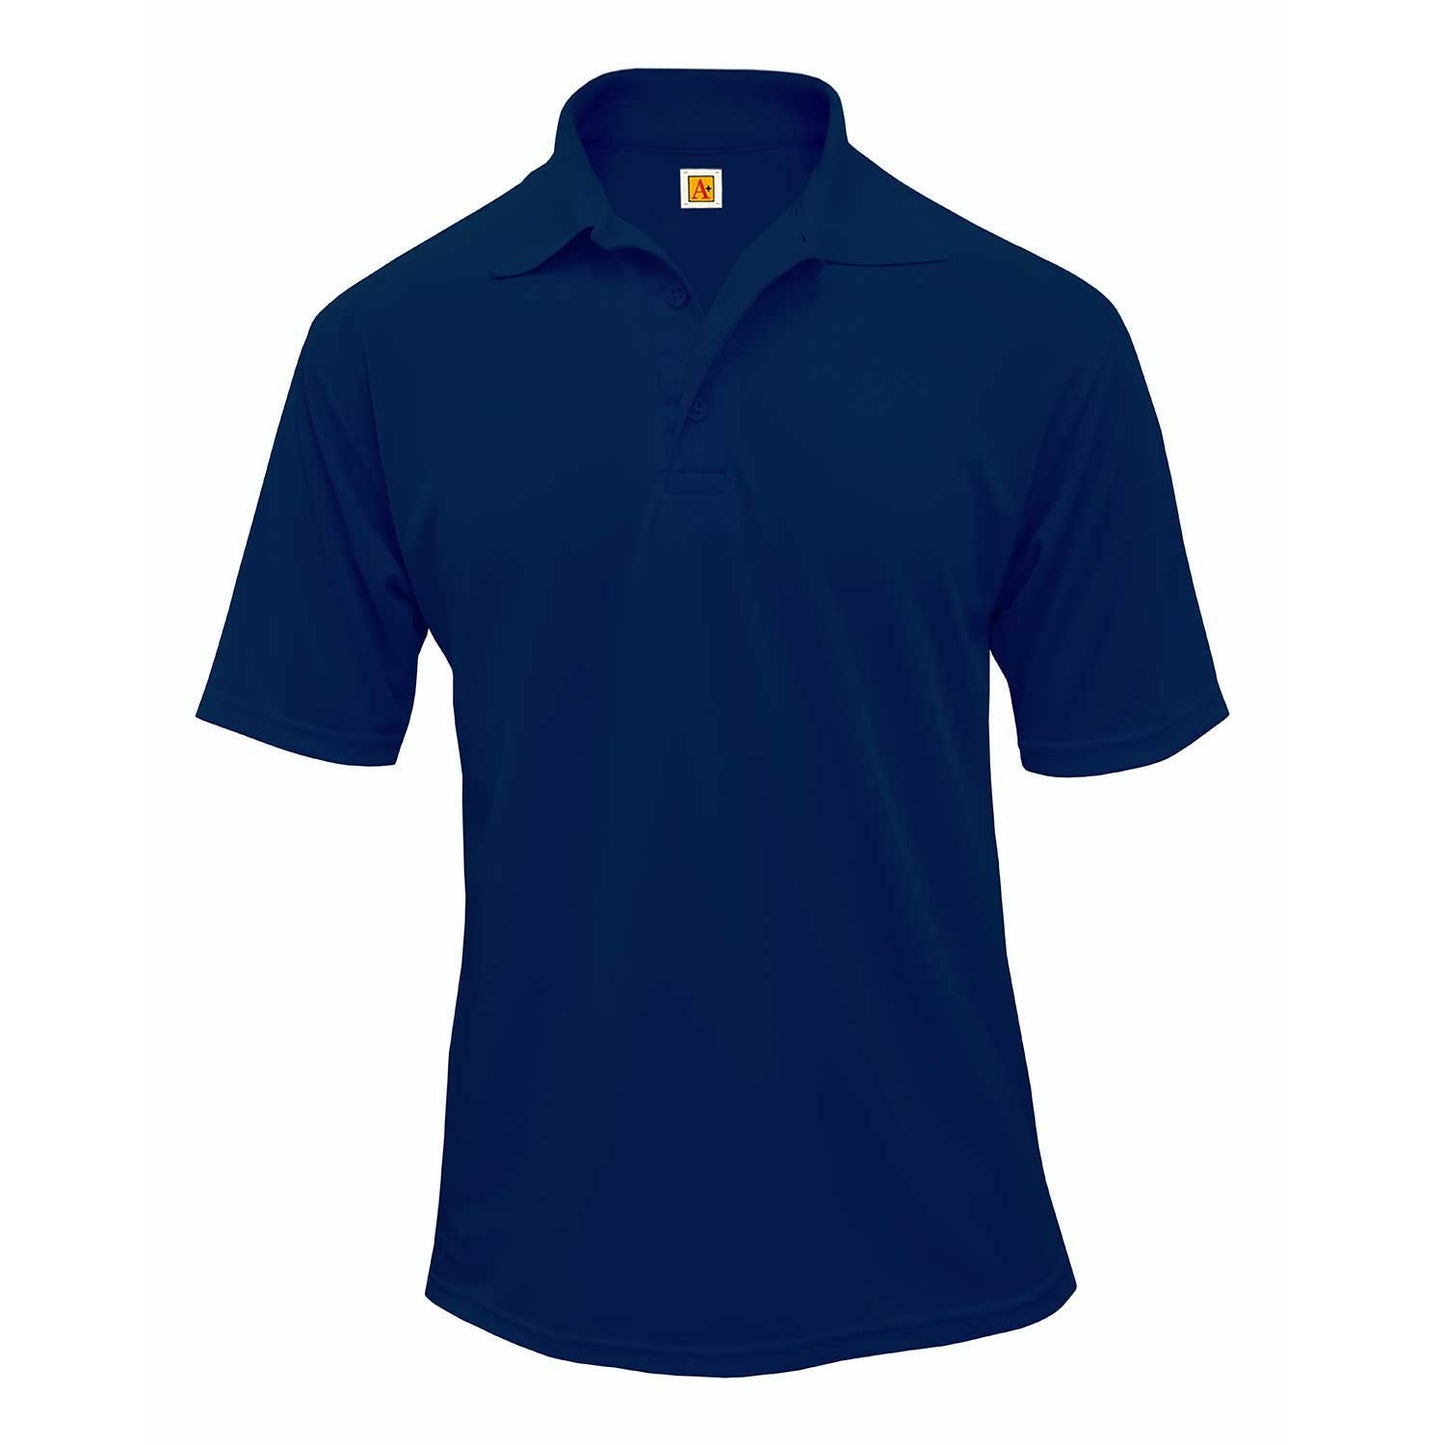 Performance Dri-fit Jersey Knit Short Sleeve Shirt (Unisex) w/Logo - 1107